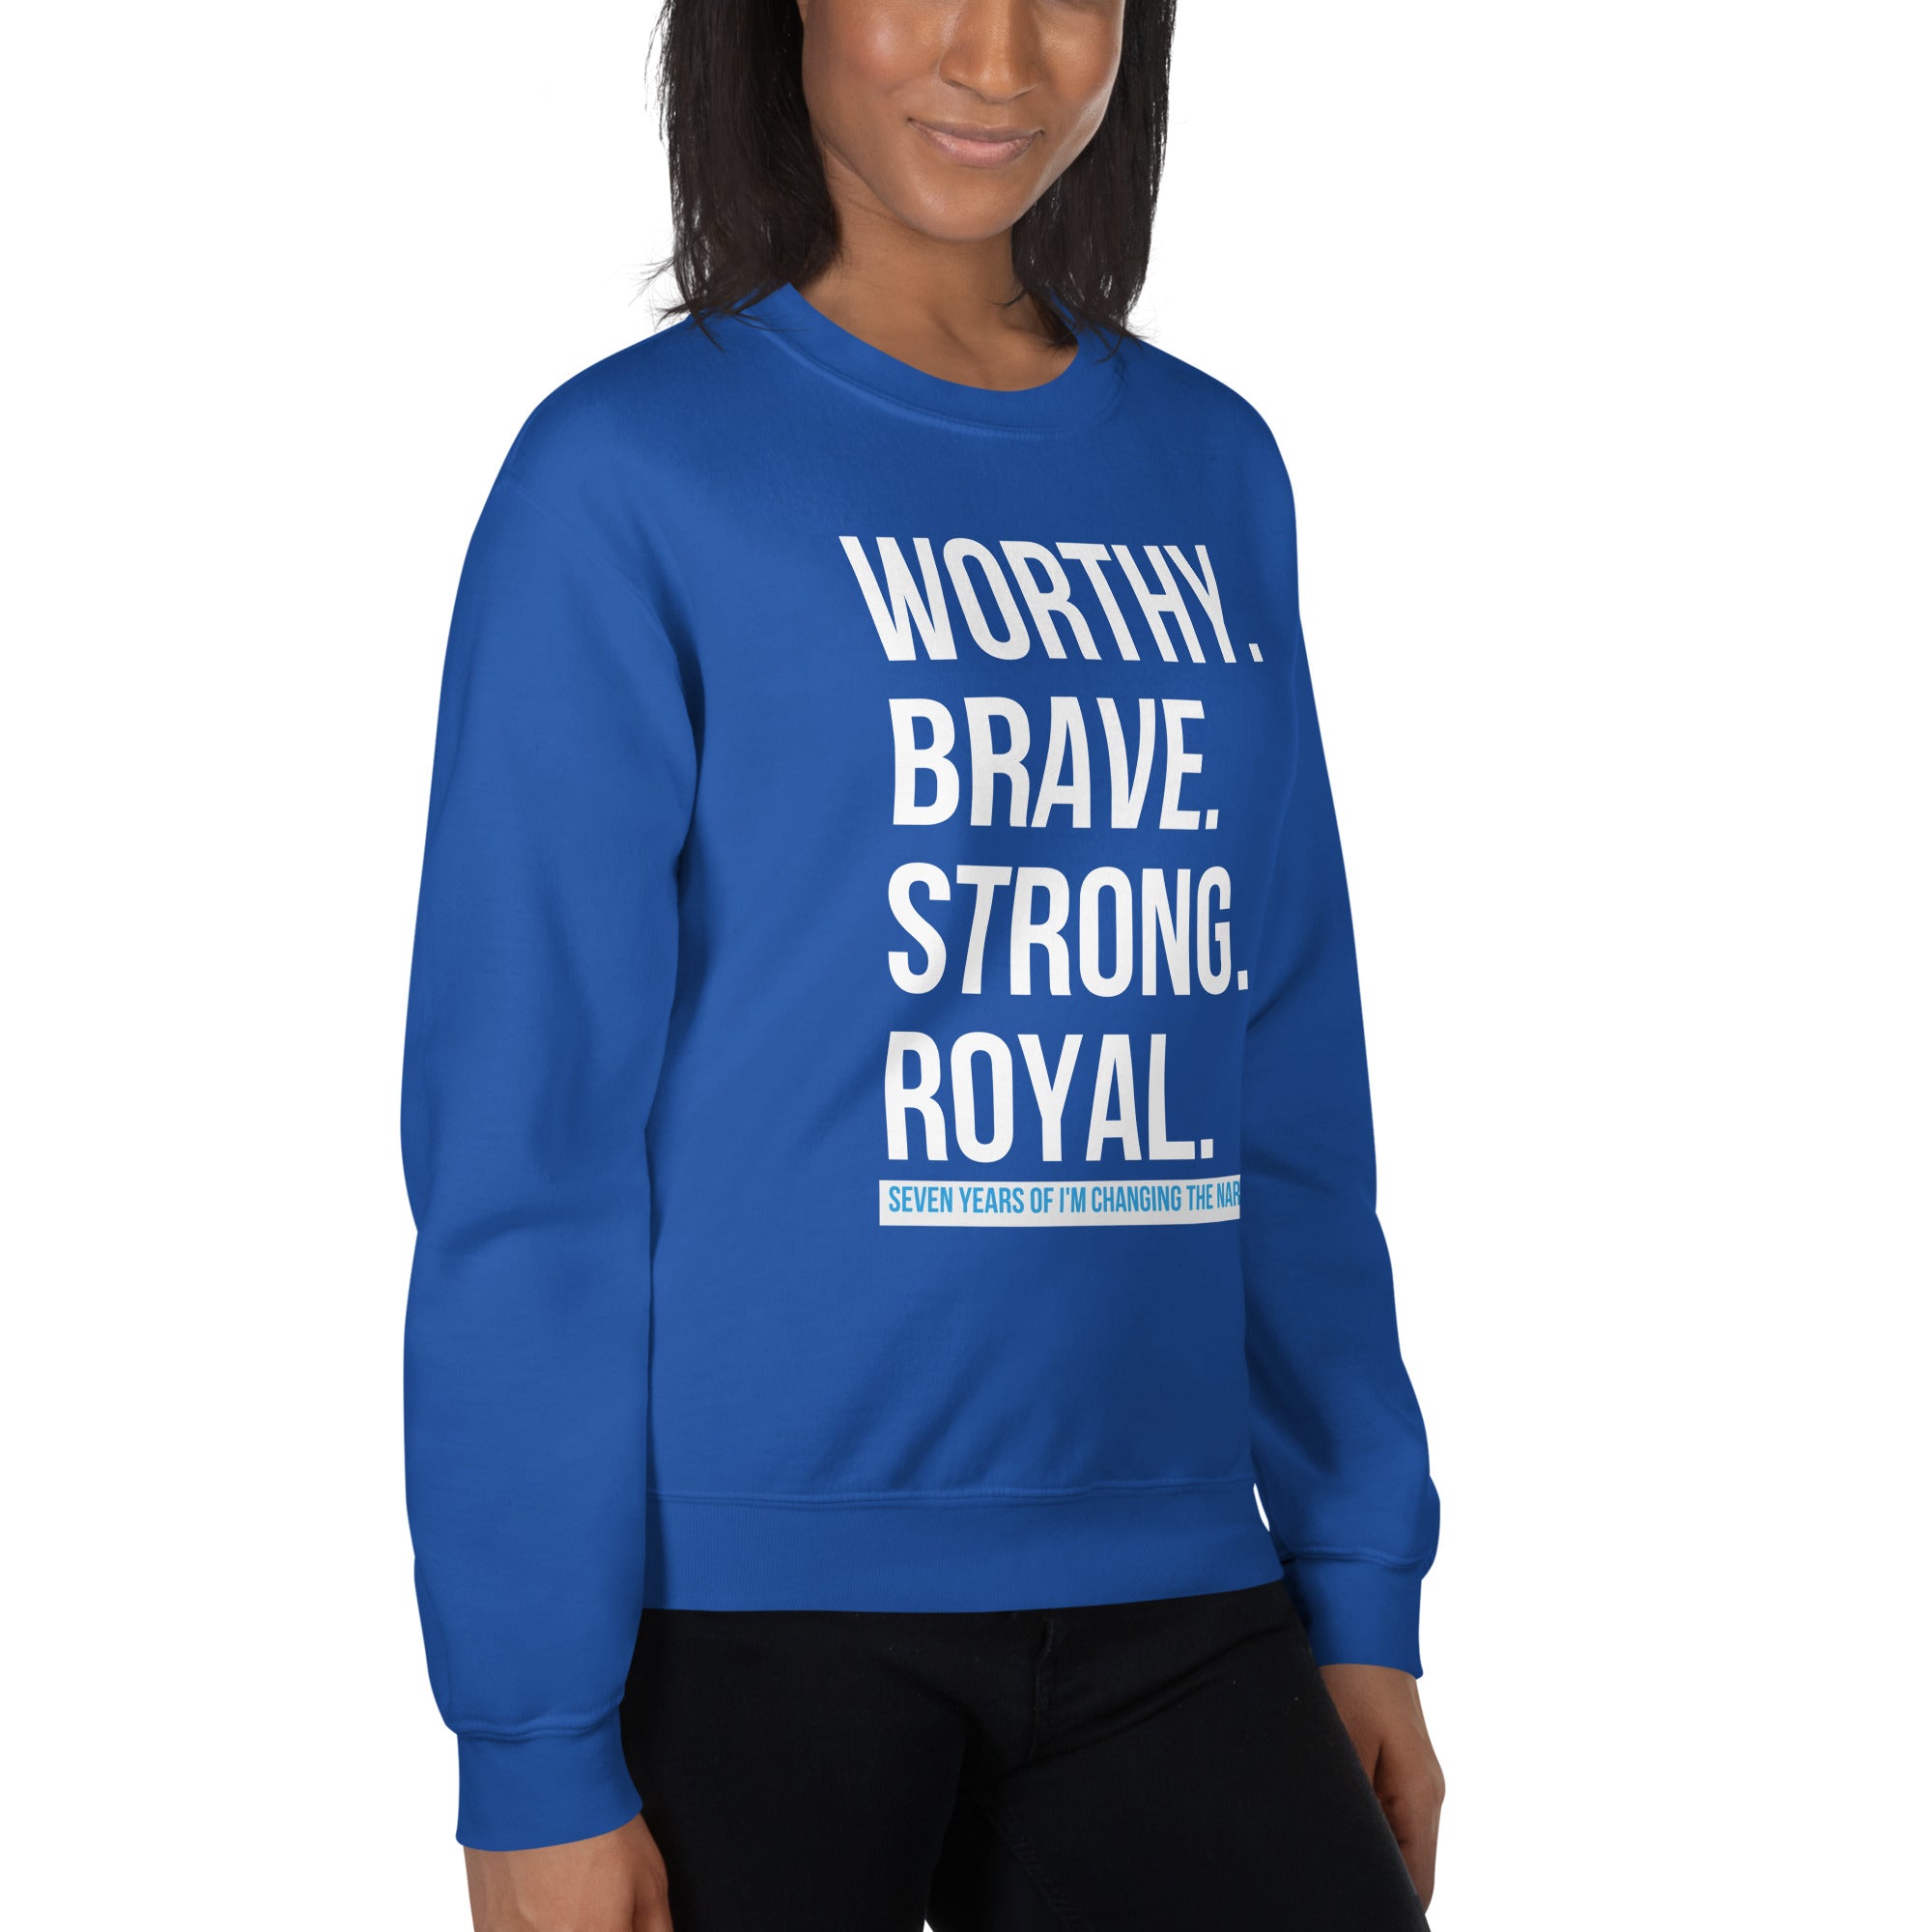 Worthy, Brave, Strong, Royal - ICTN Sweatshirt